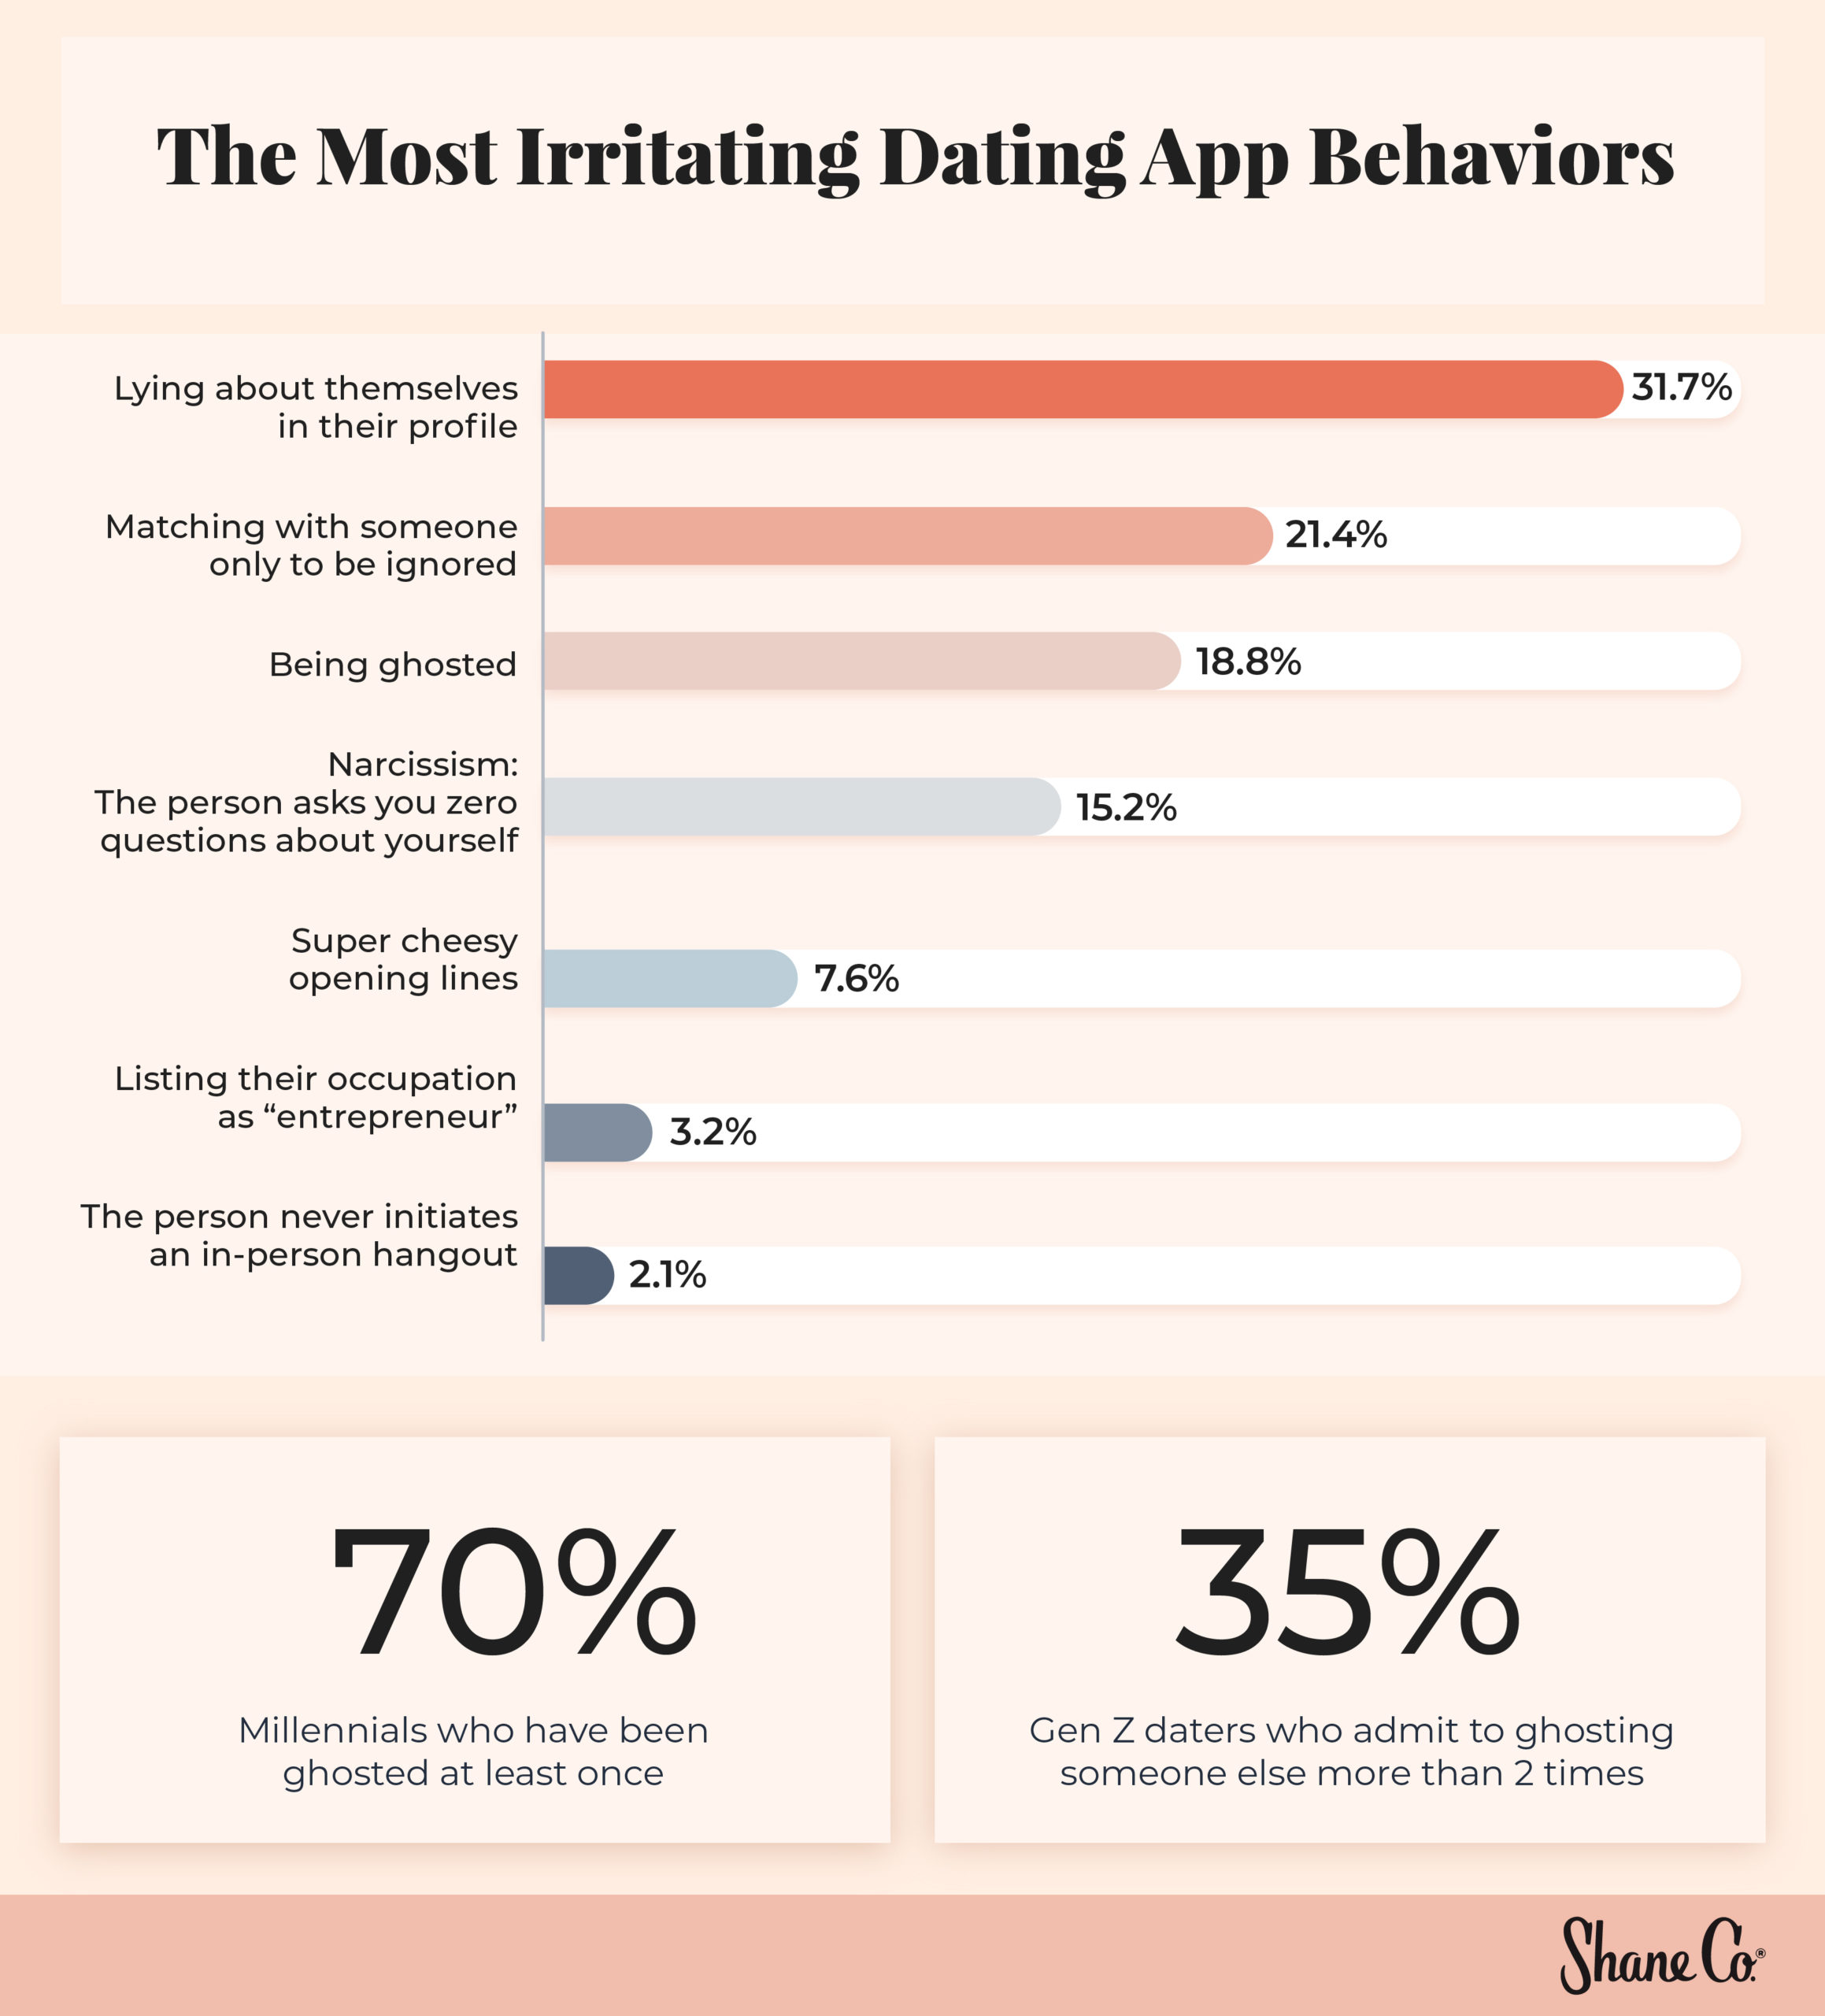 Bar chart showing the most irritating dating app behaviors.